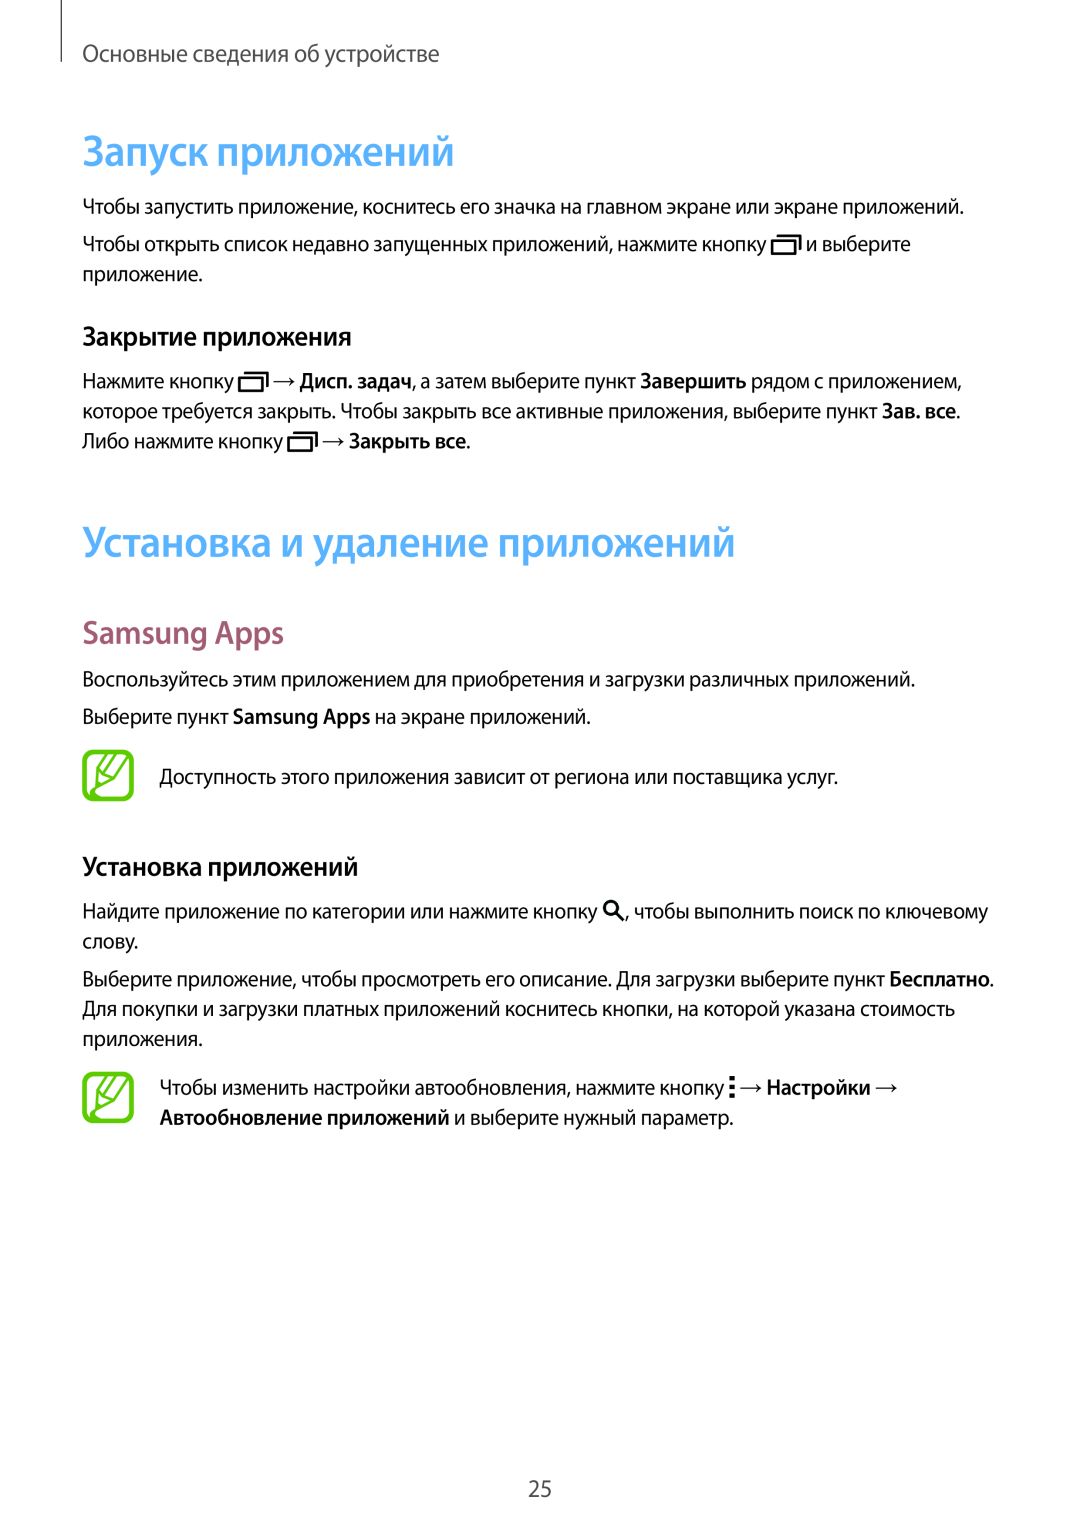 Samsung SM-T800NZWASEB manual Запуск приложений, Установка и удаление приложений, Samsung Apps, Закрытие приложения 